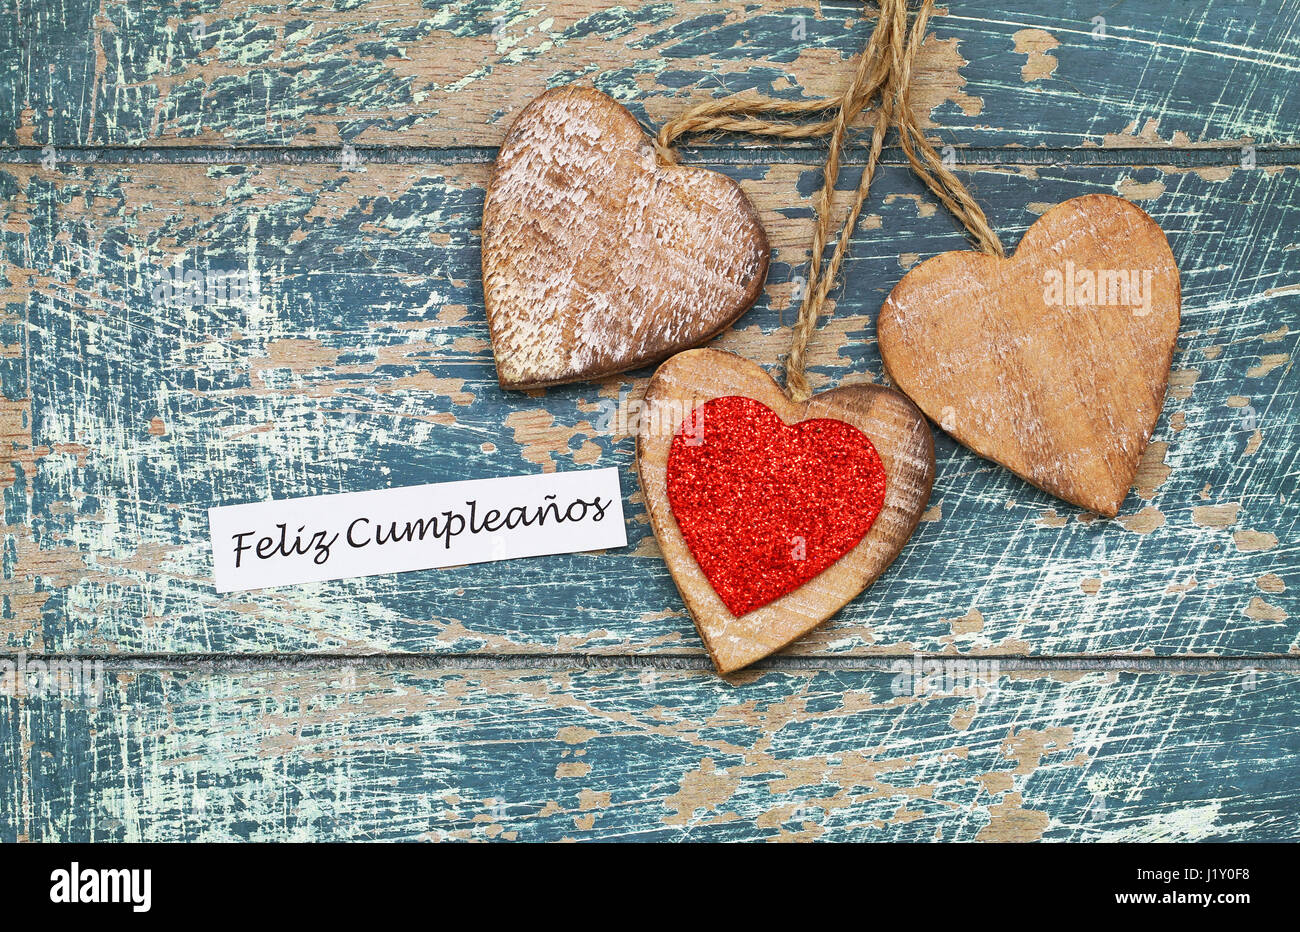 Feliz Cumpleanos (Happy Birthday in Spanish) with three wooden hearts Stock Photo